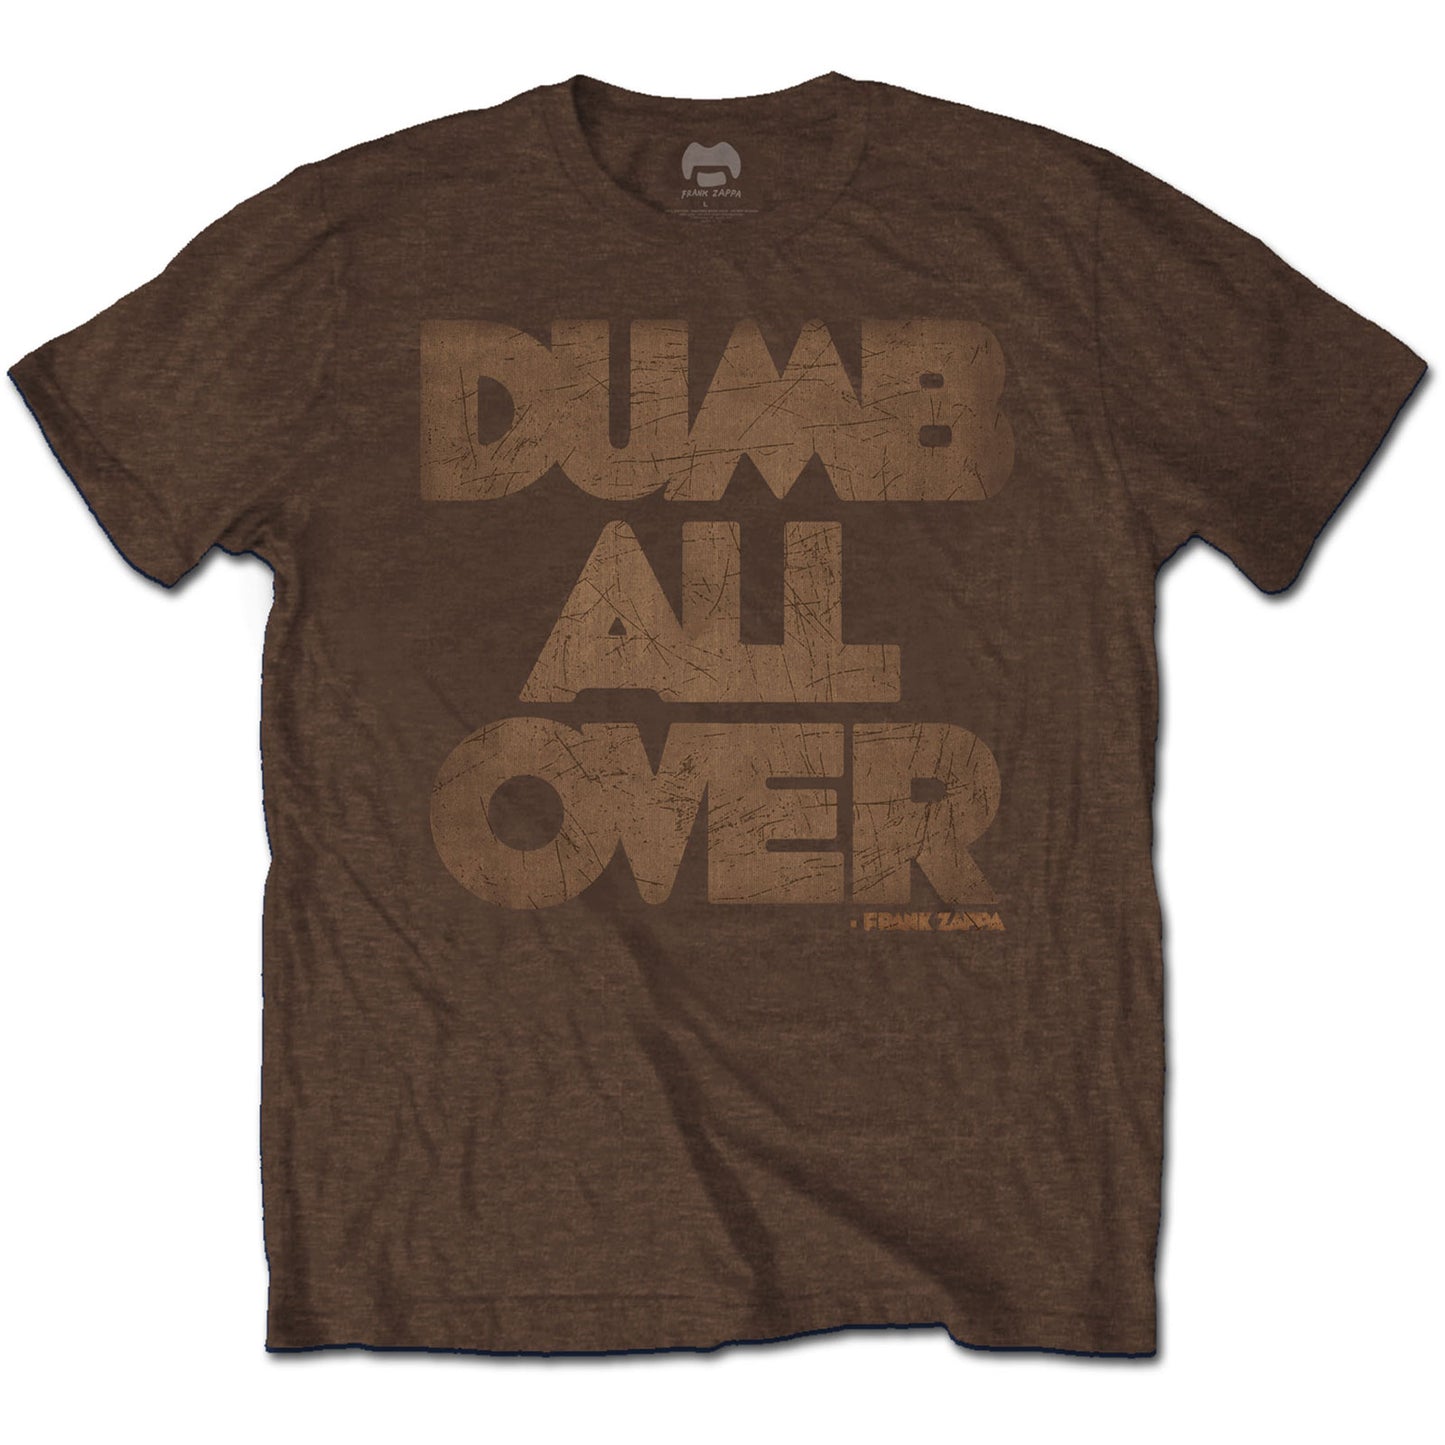 Frank Zappa T-Shirt: Dumb All Over